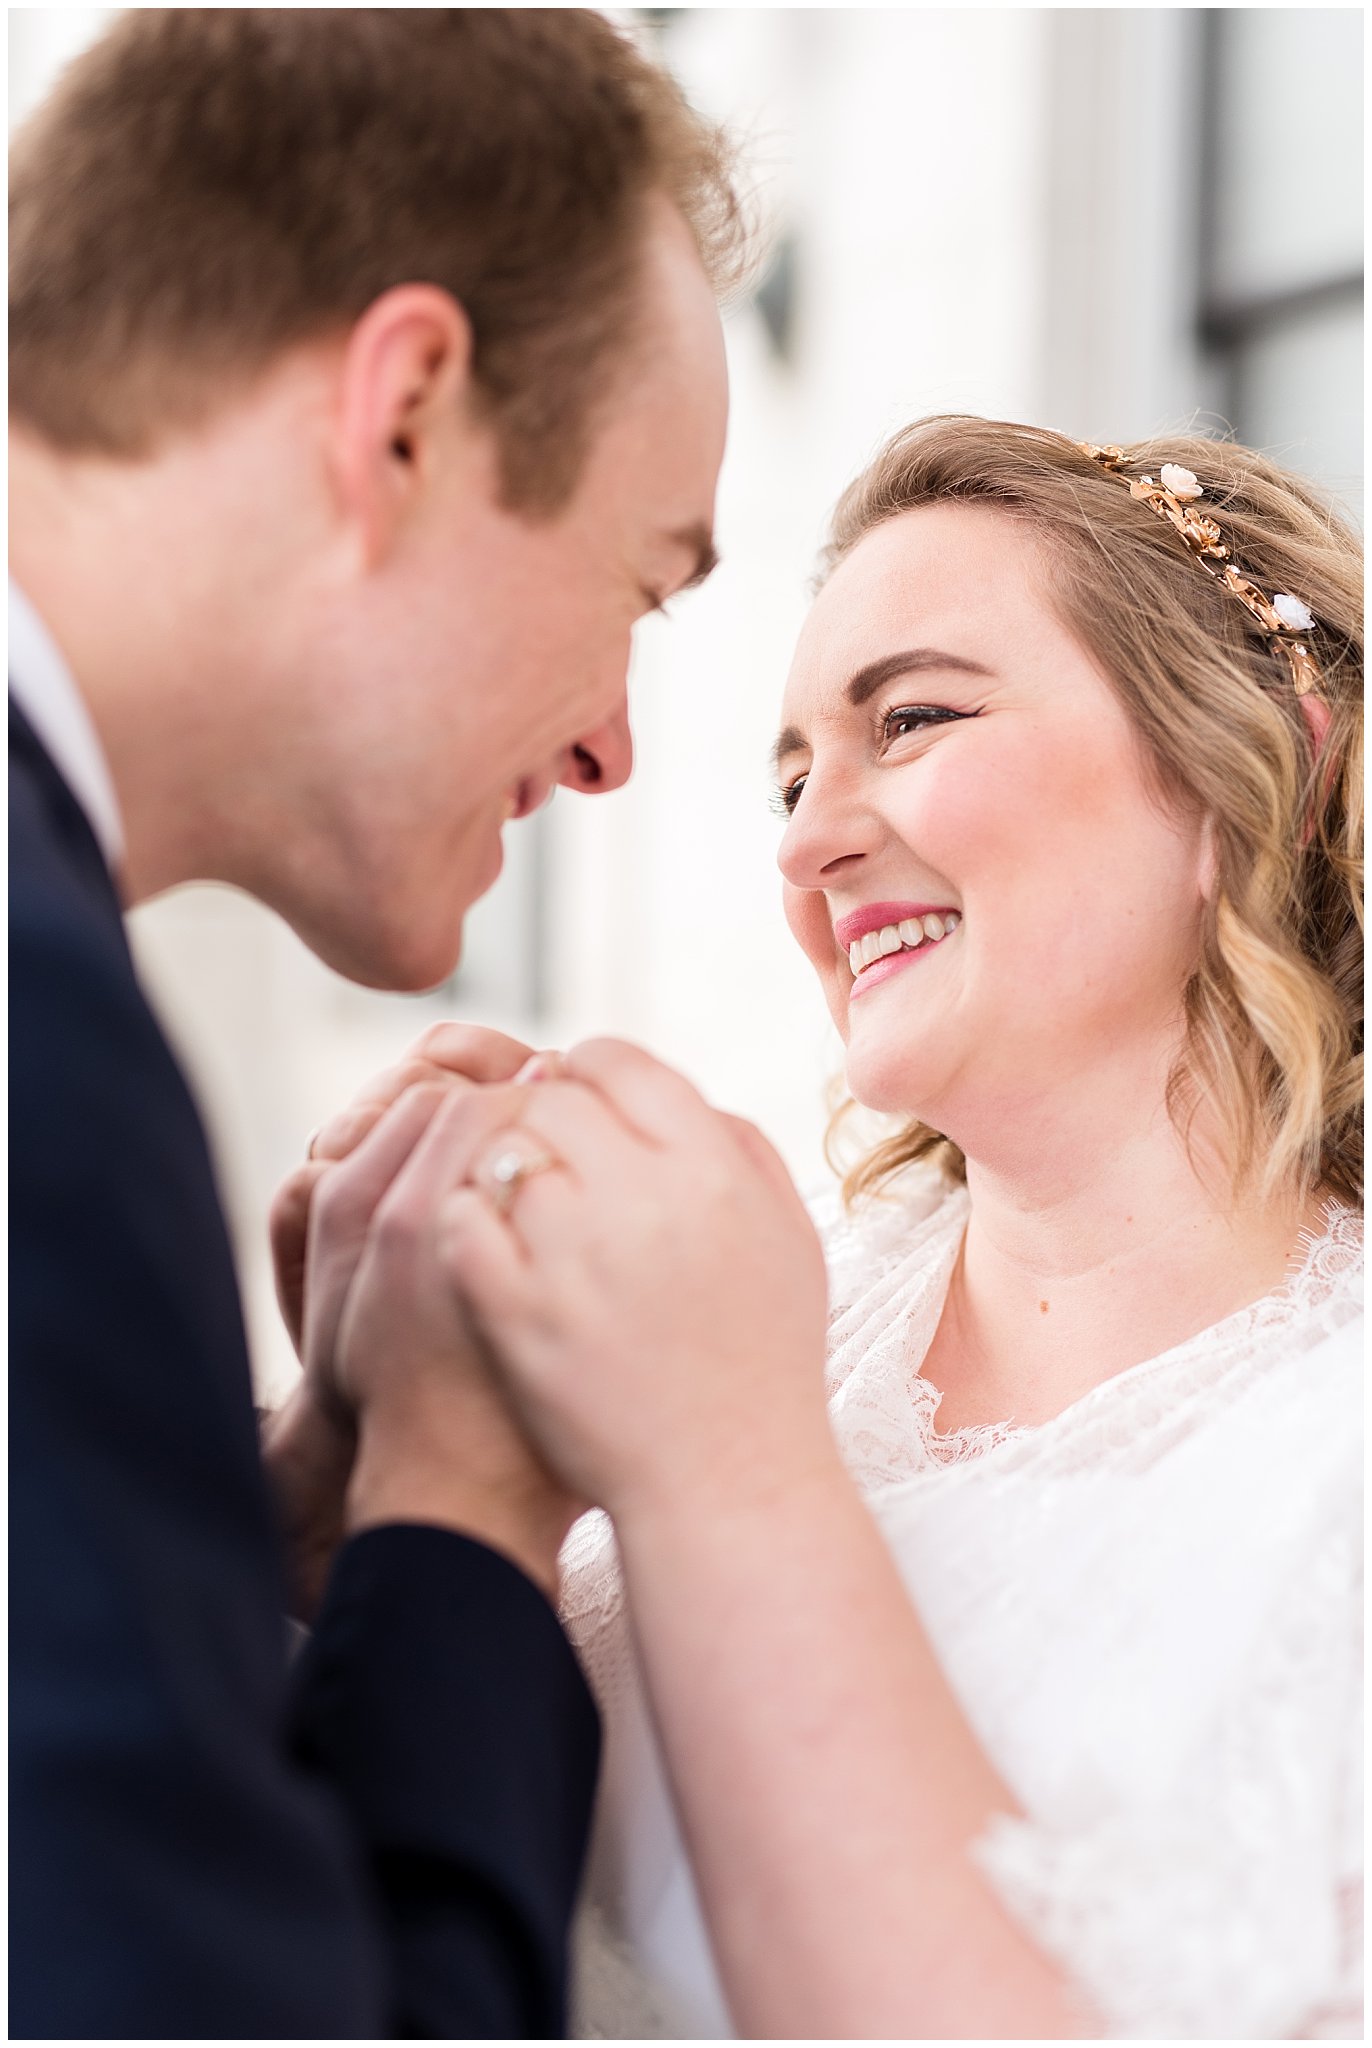 Utah State Capitol Building wedding | Salt Lake City Wedding | Bride and groom | Jessie and Dallin Photography